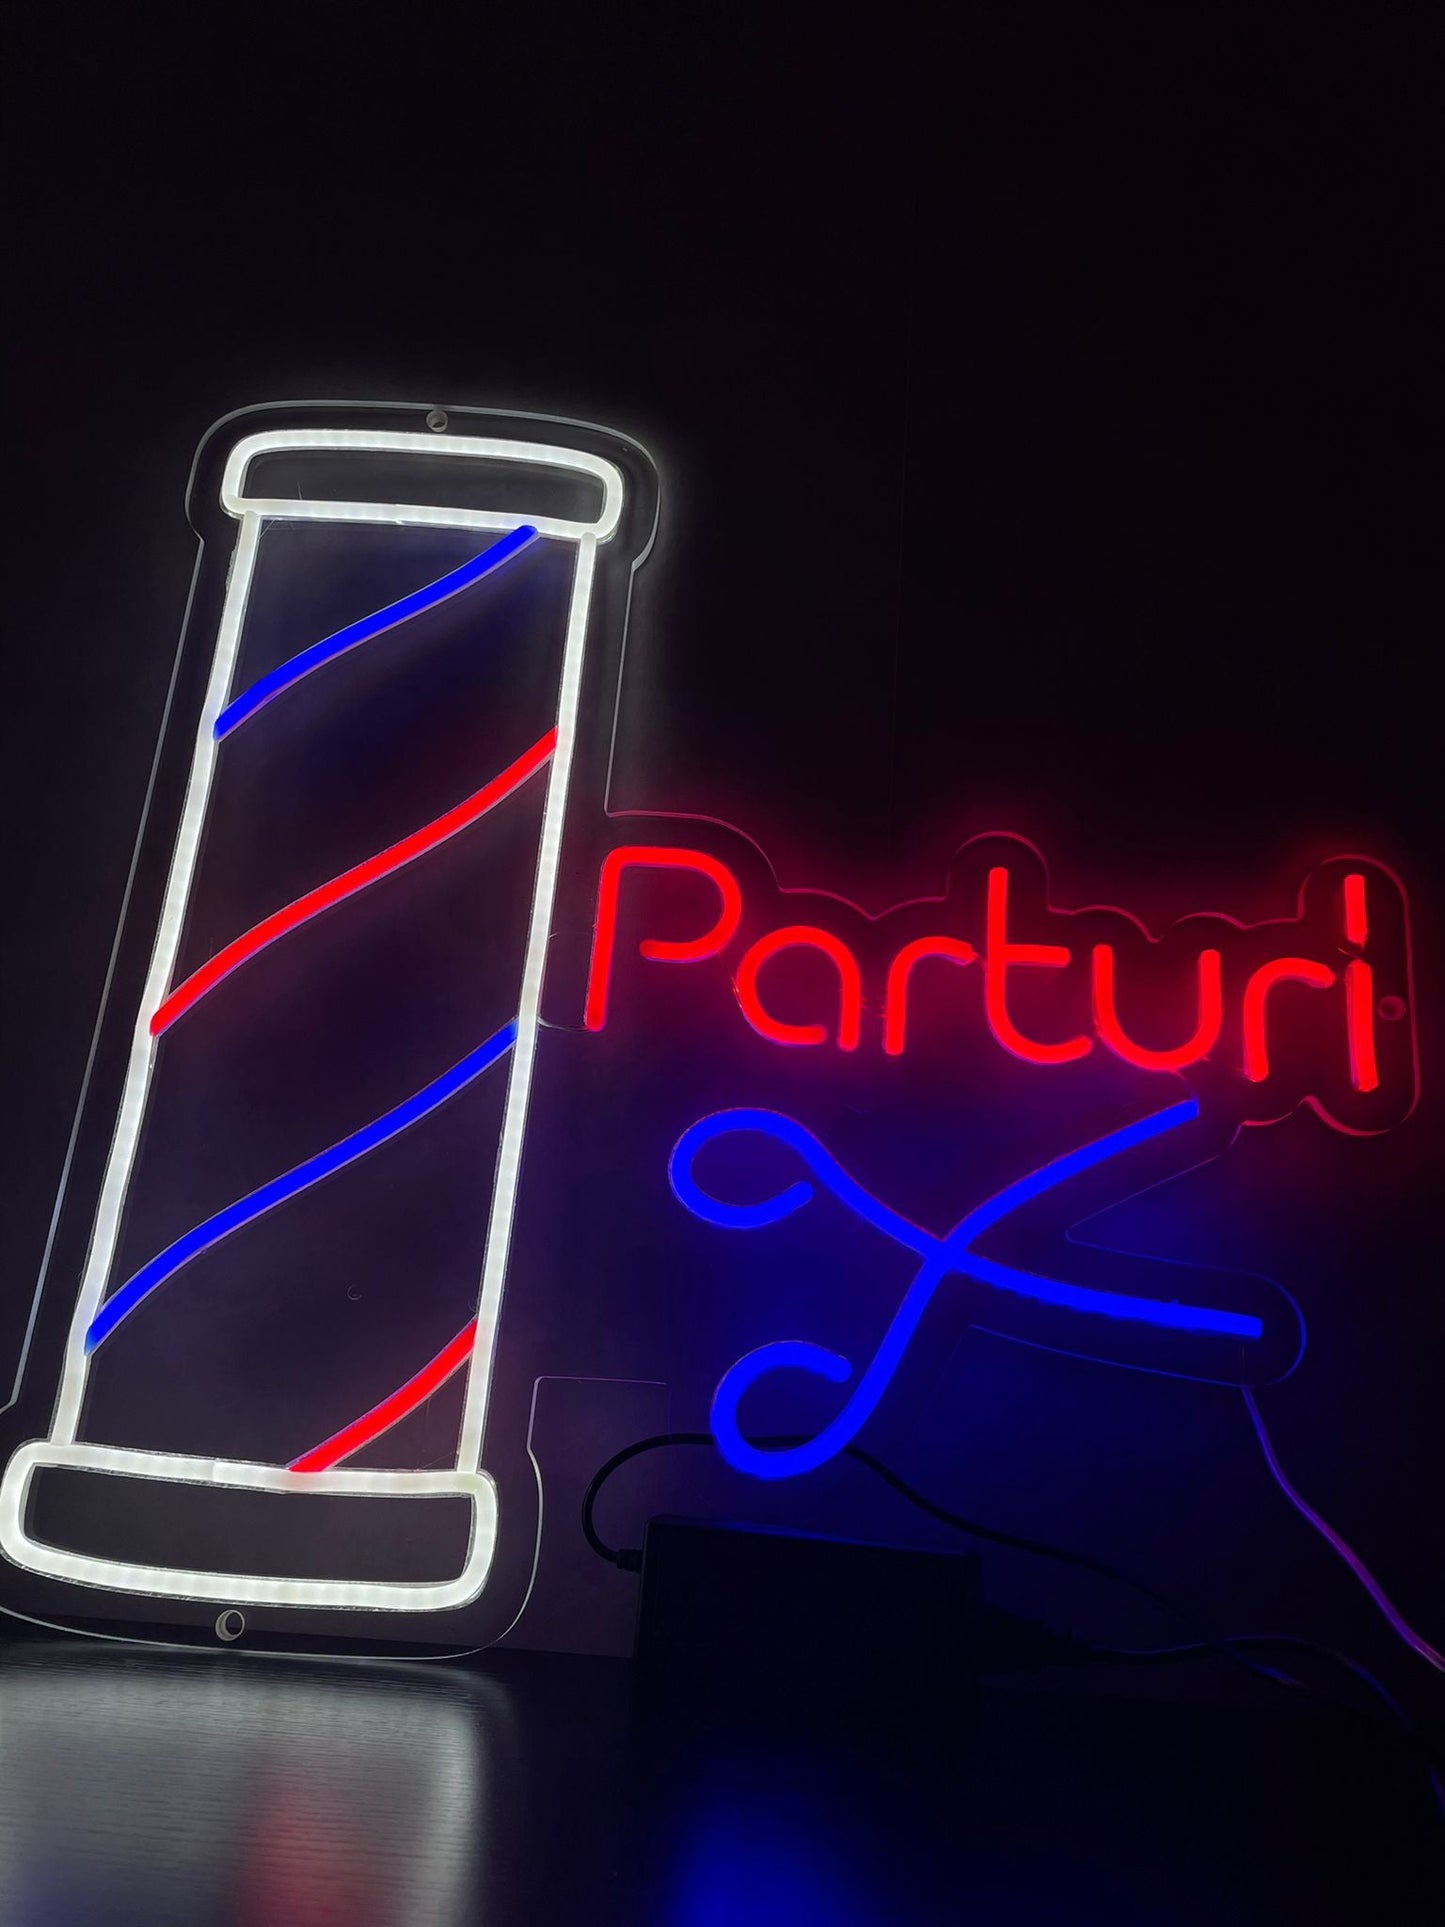 Parturi Barber Shop Neon Sign